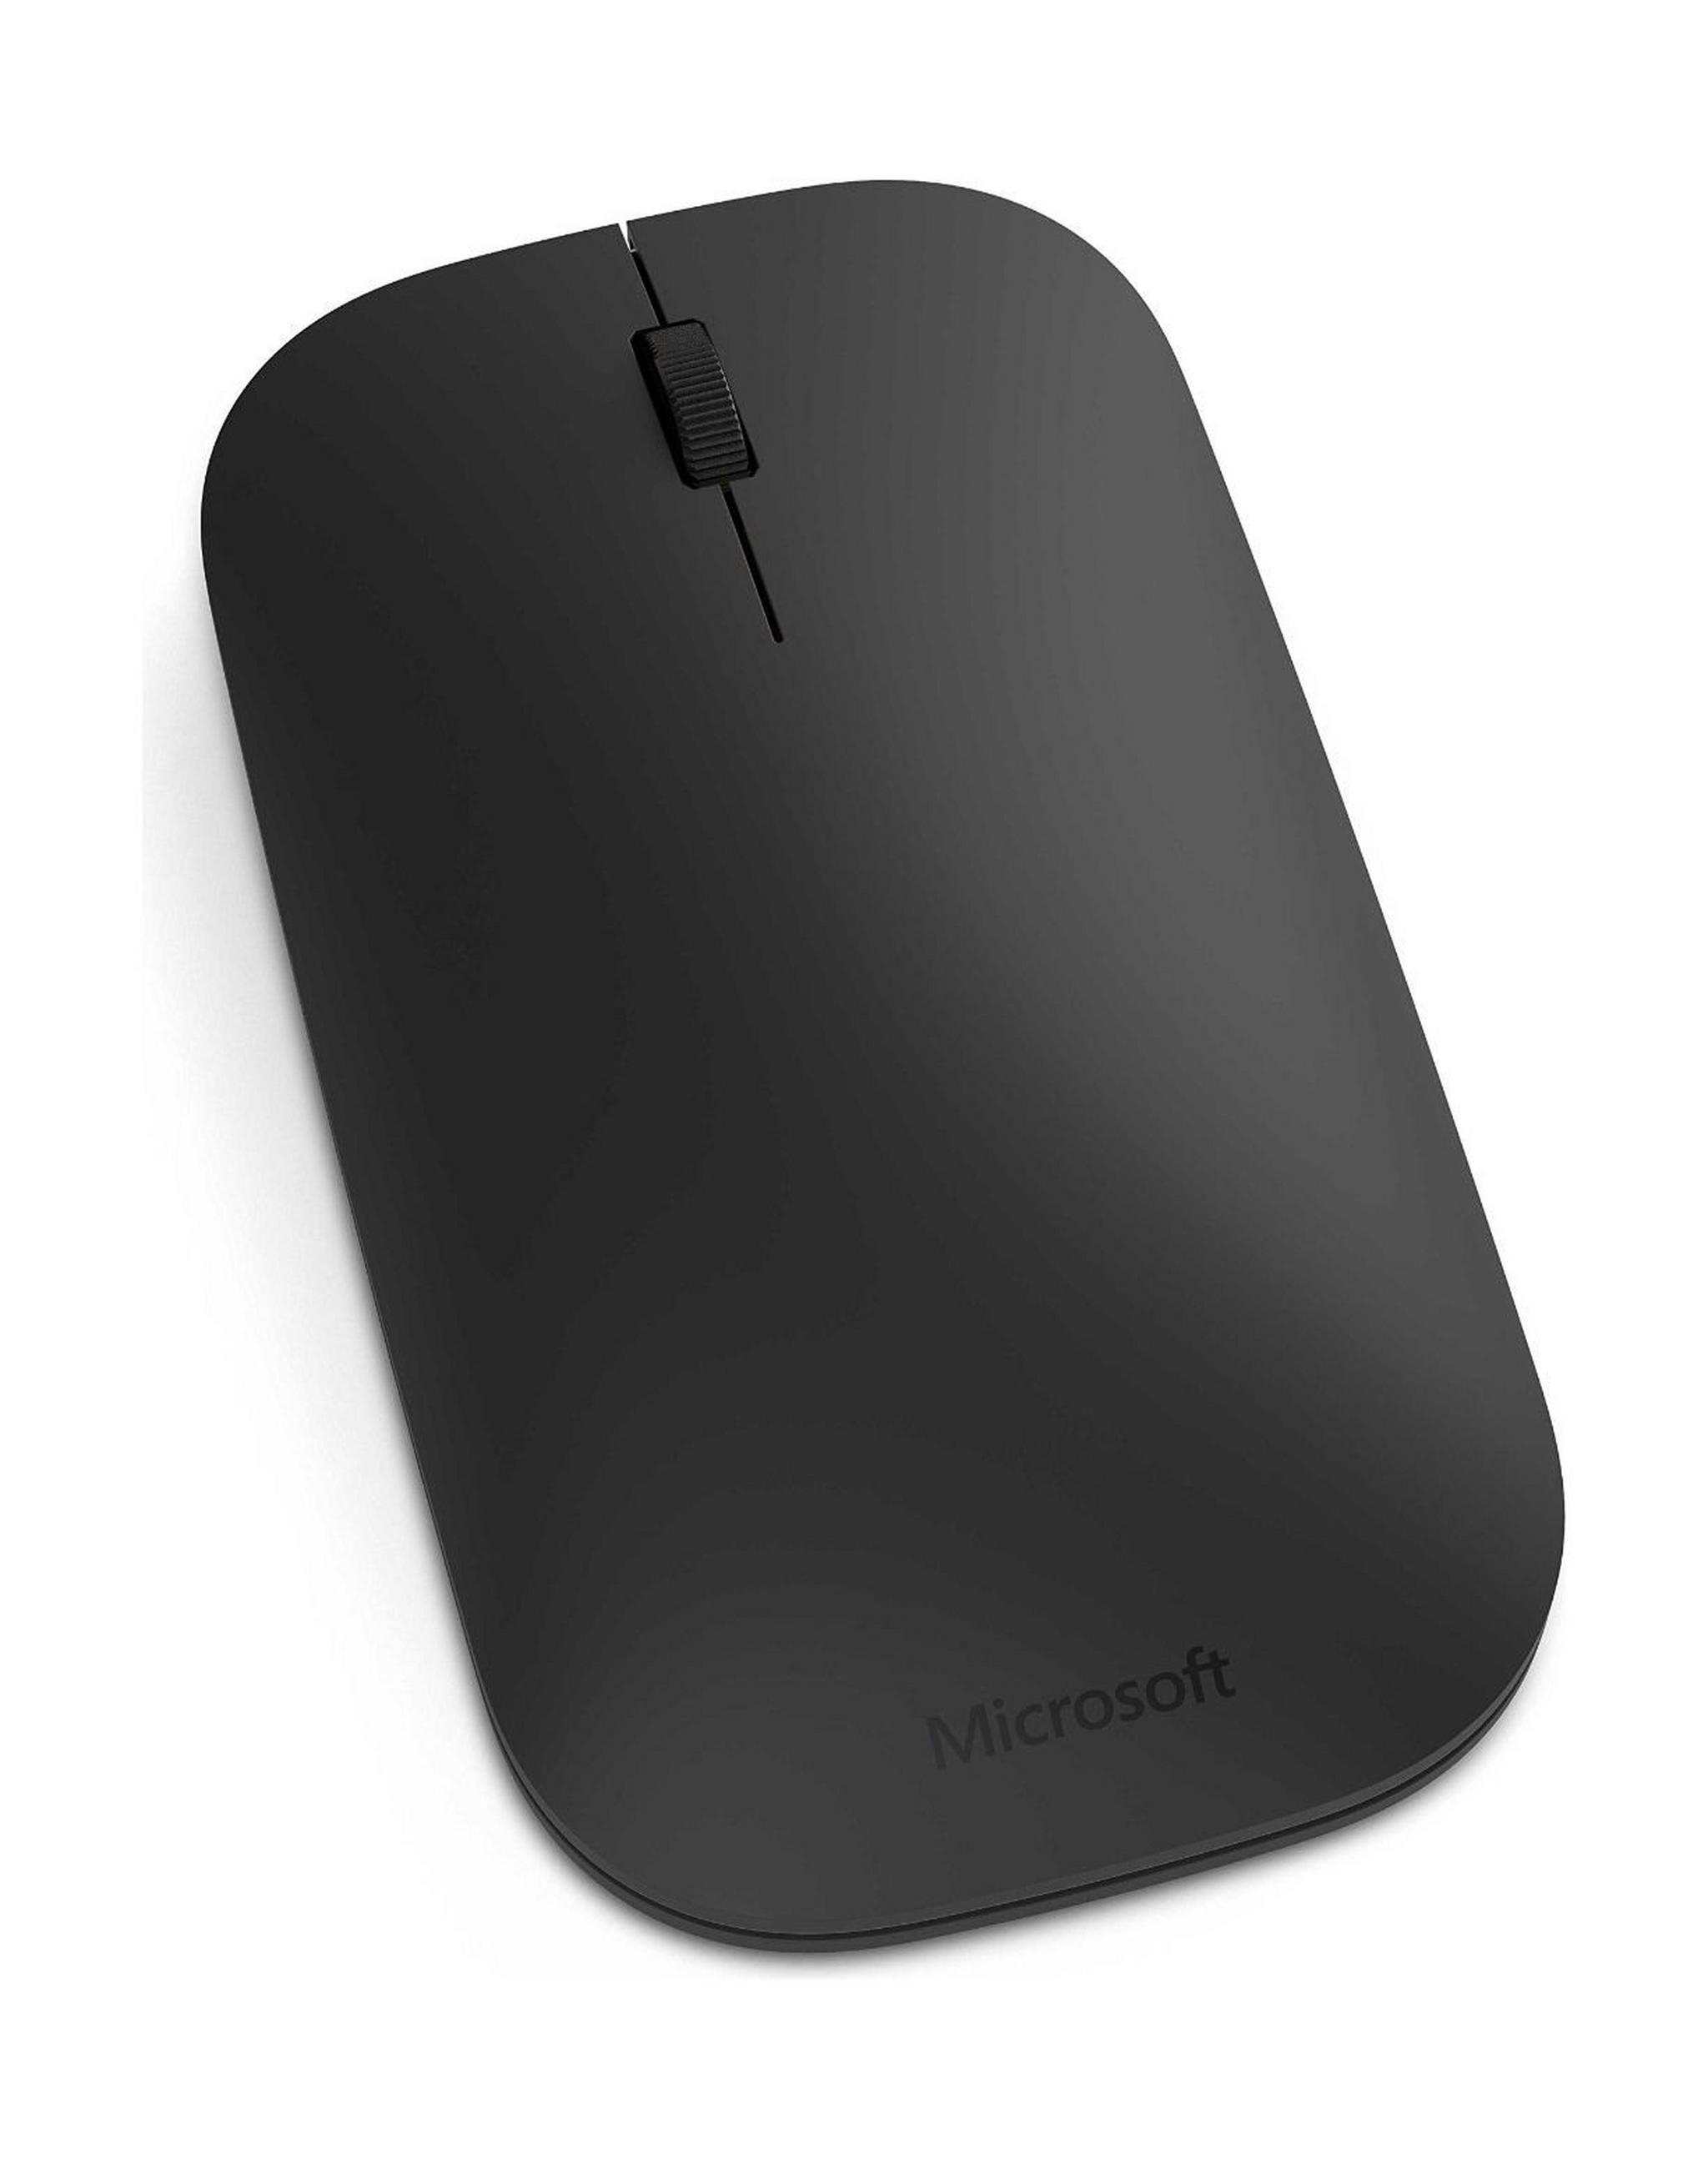 Microsoft Designer Bluetooth Mouse - Black (7N5-00009)